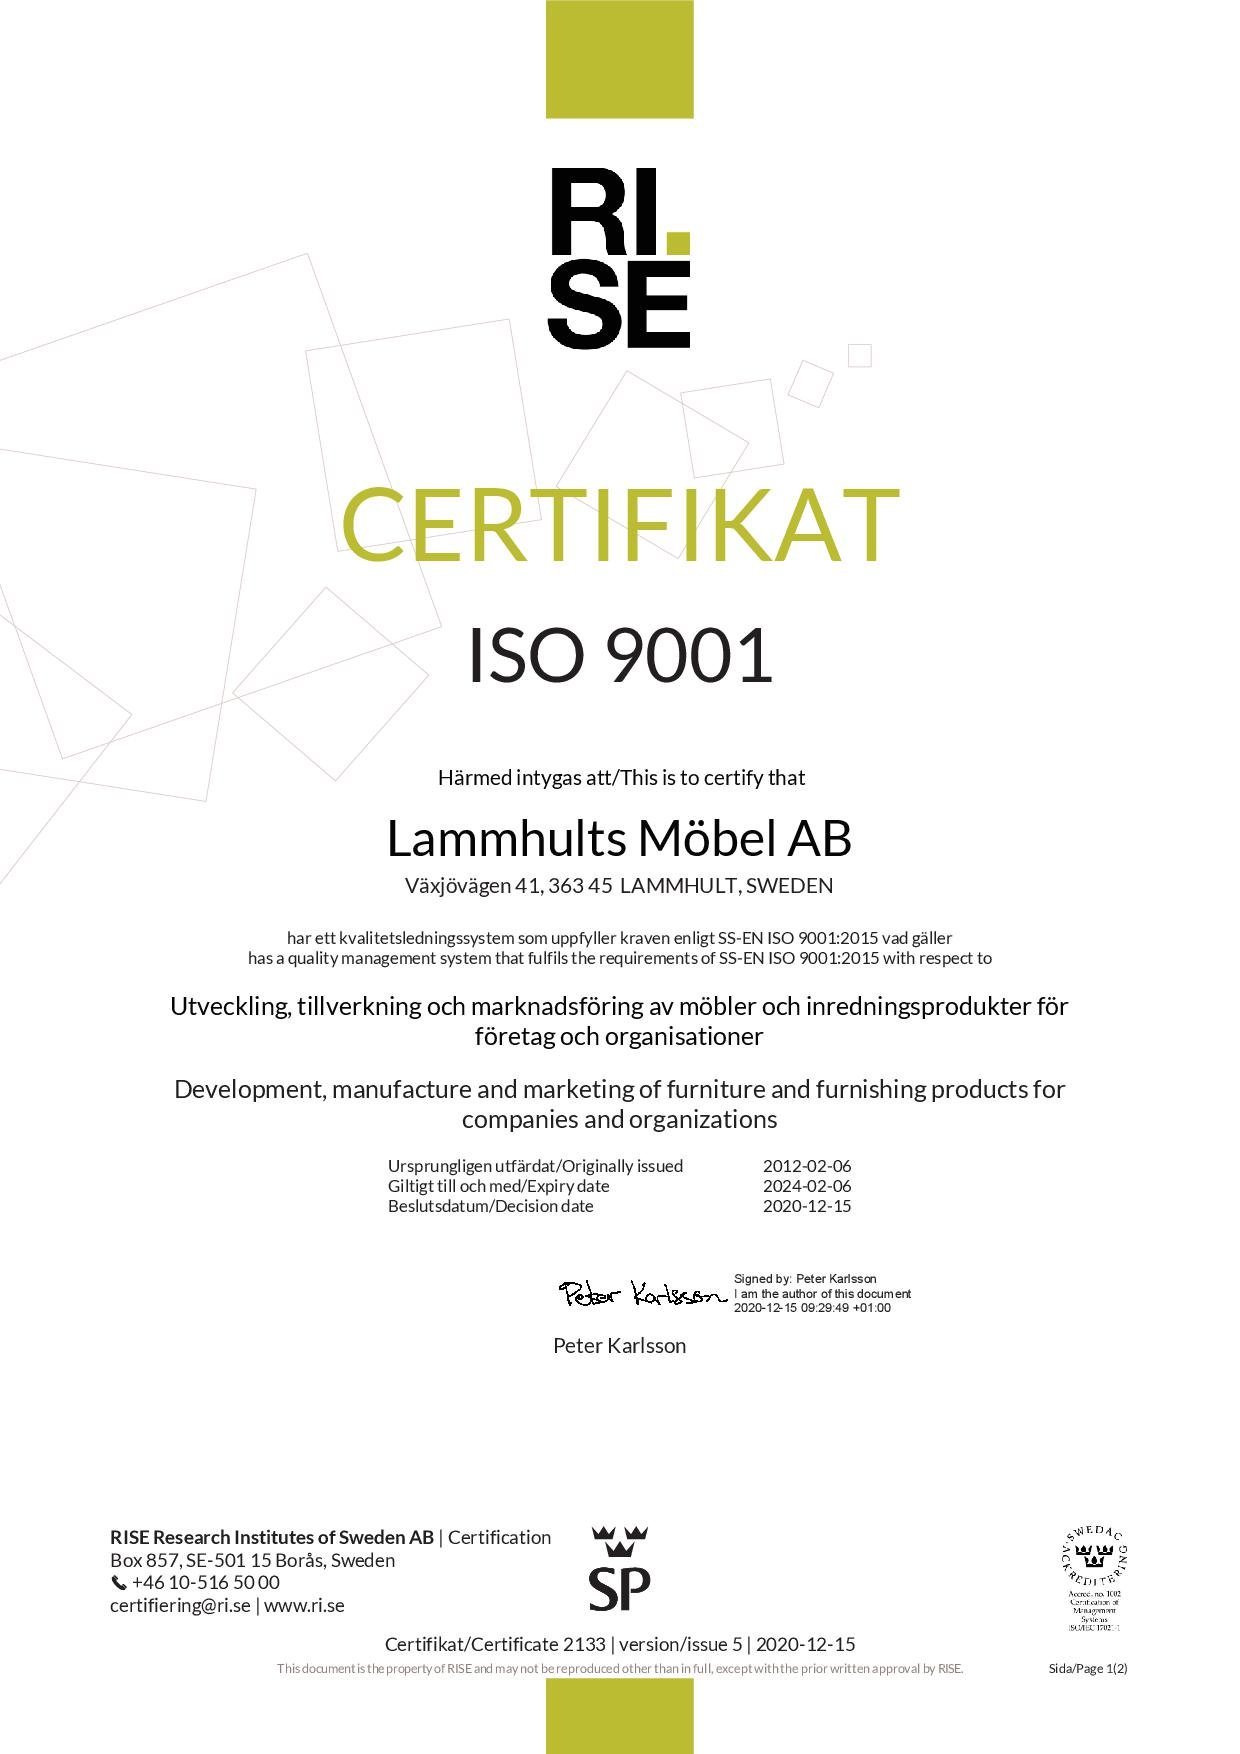 Lammhults certificat Iso9001